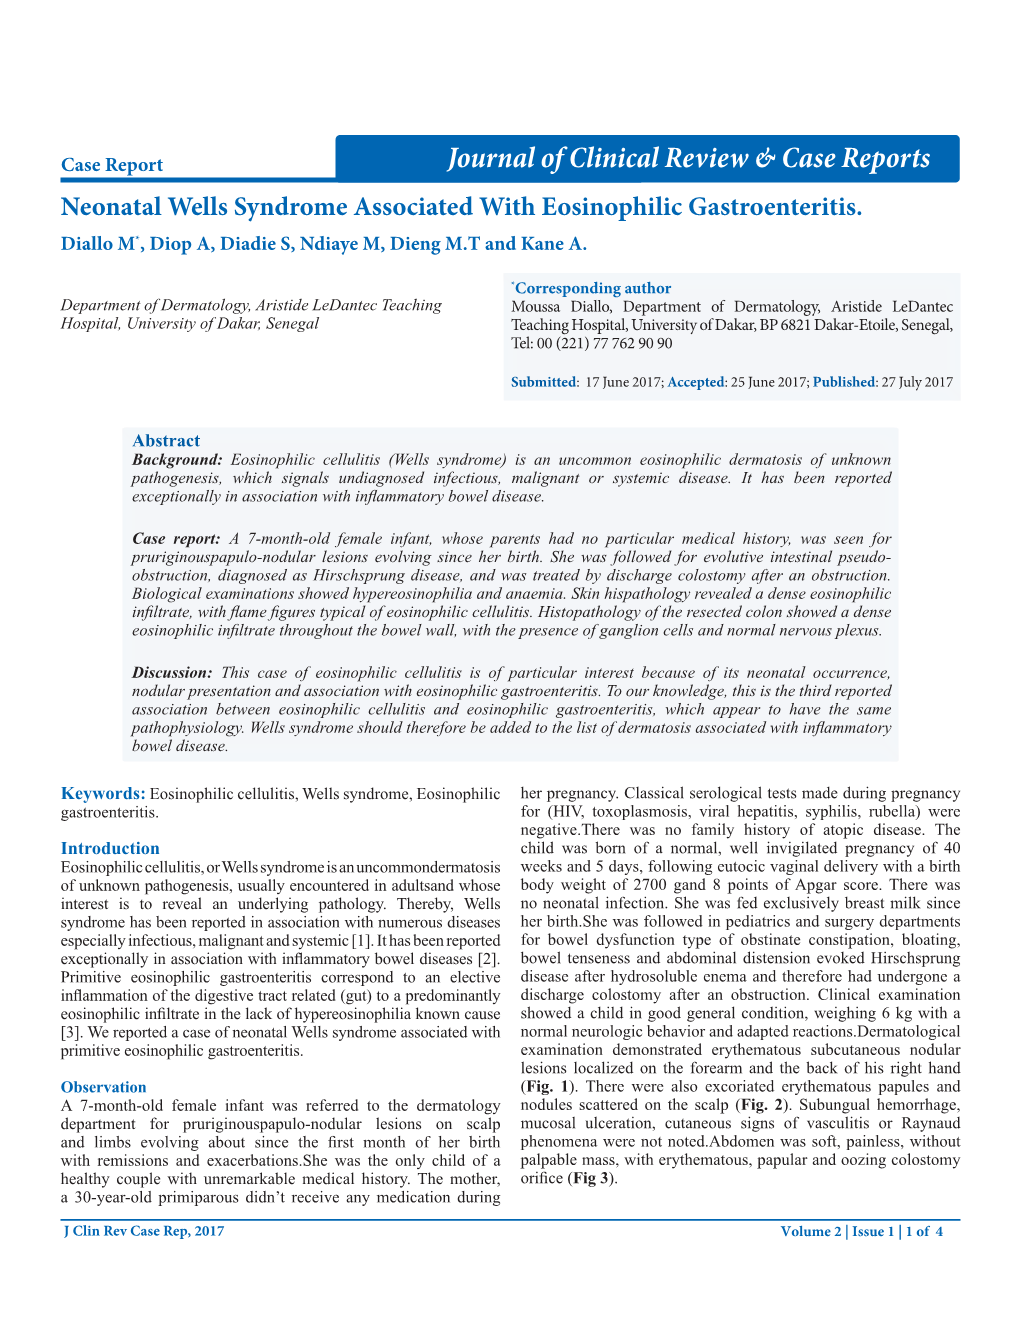 Neonatal Wells Syndrome Associated with Eosinophilic Gastroenteritis